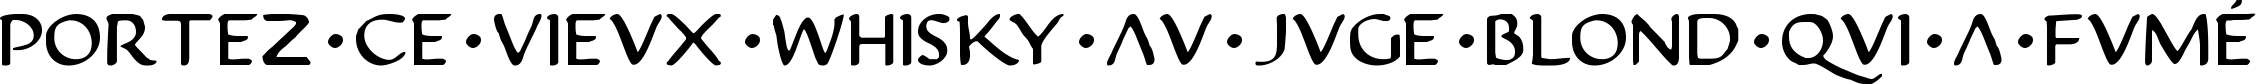 Пример написания шрифтом Justinian 2 текста на французском